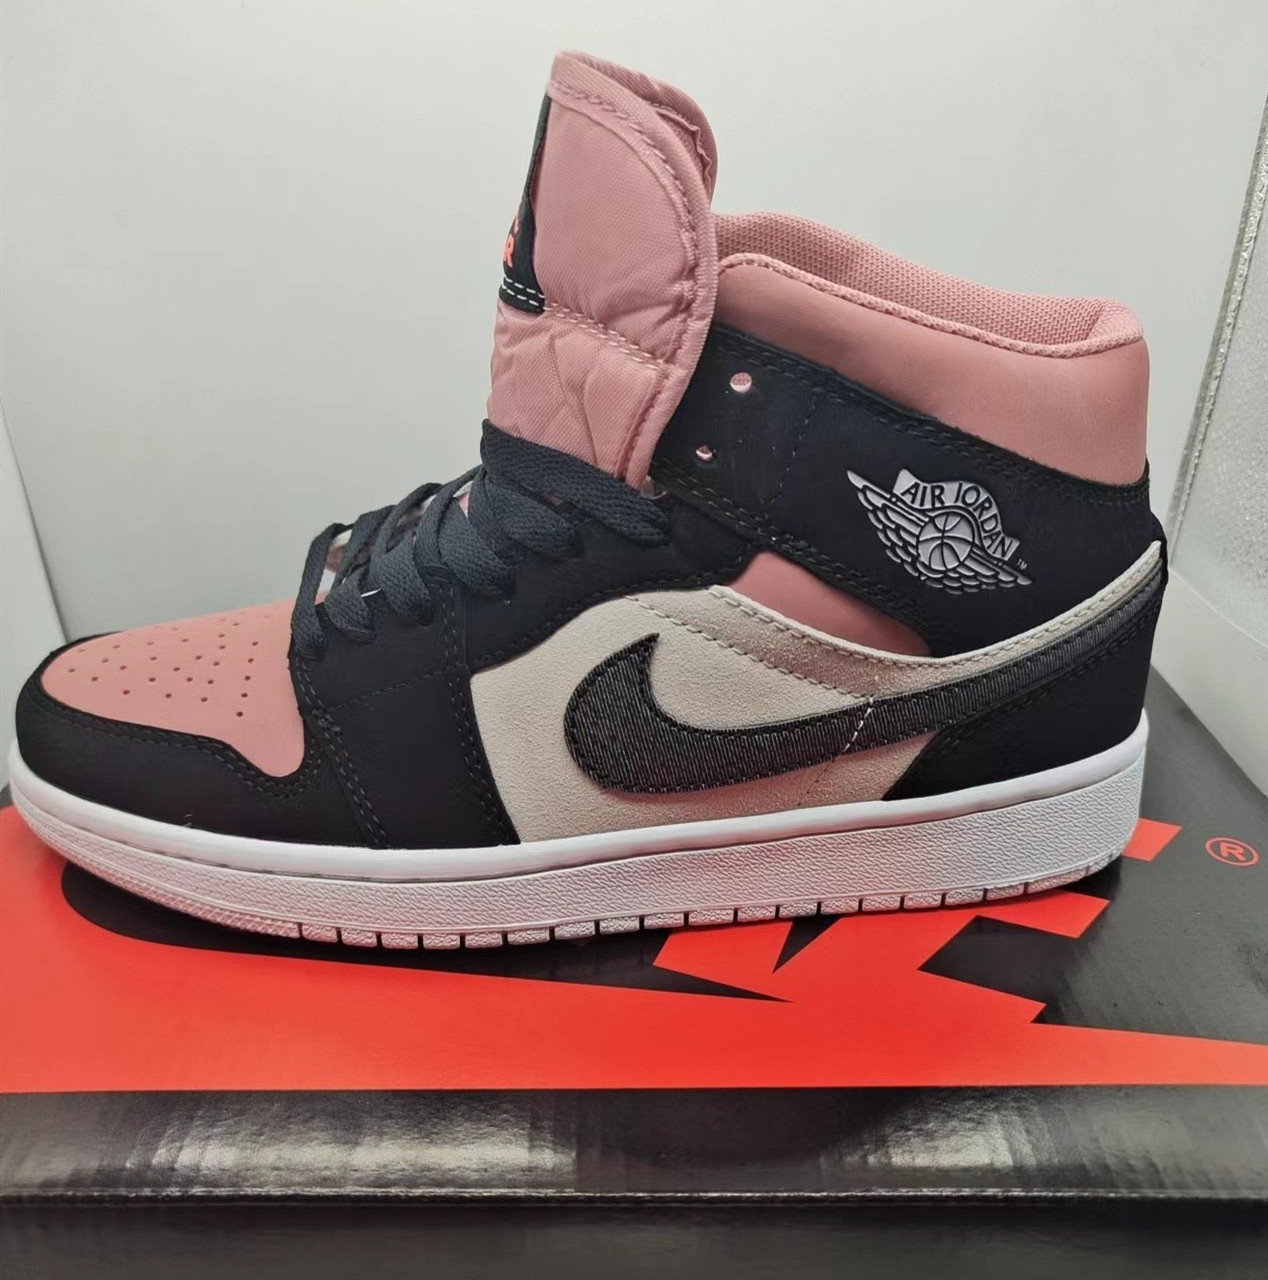 Women's Running Weapon Air Jordan 1 Pink/Black Shoes 0217